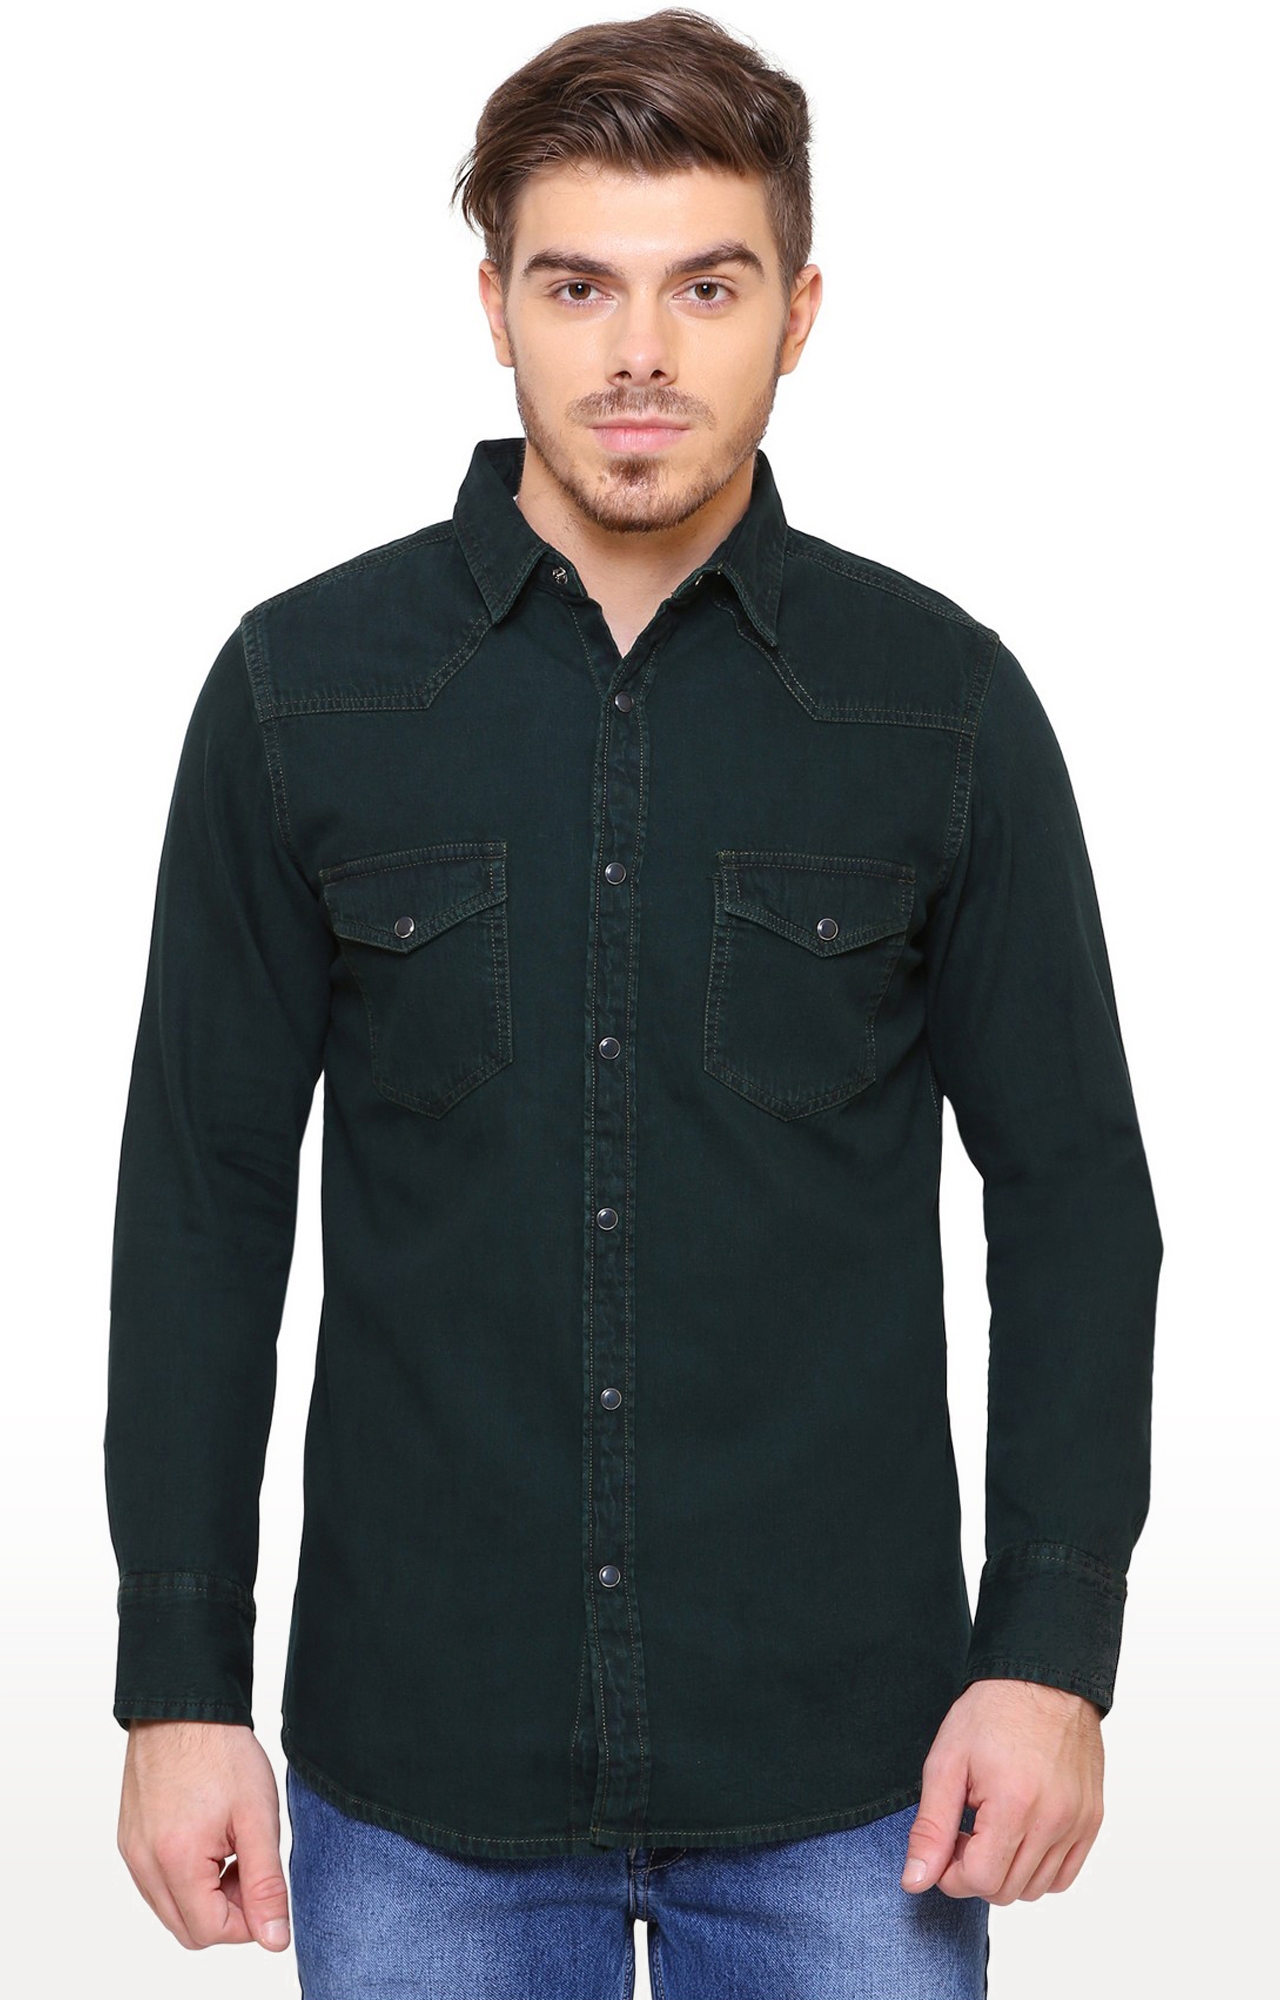 Southbay Men's Green Casual Denim Shirt